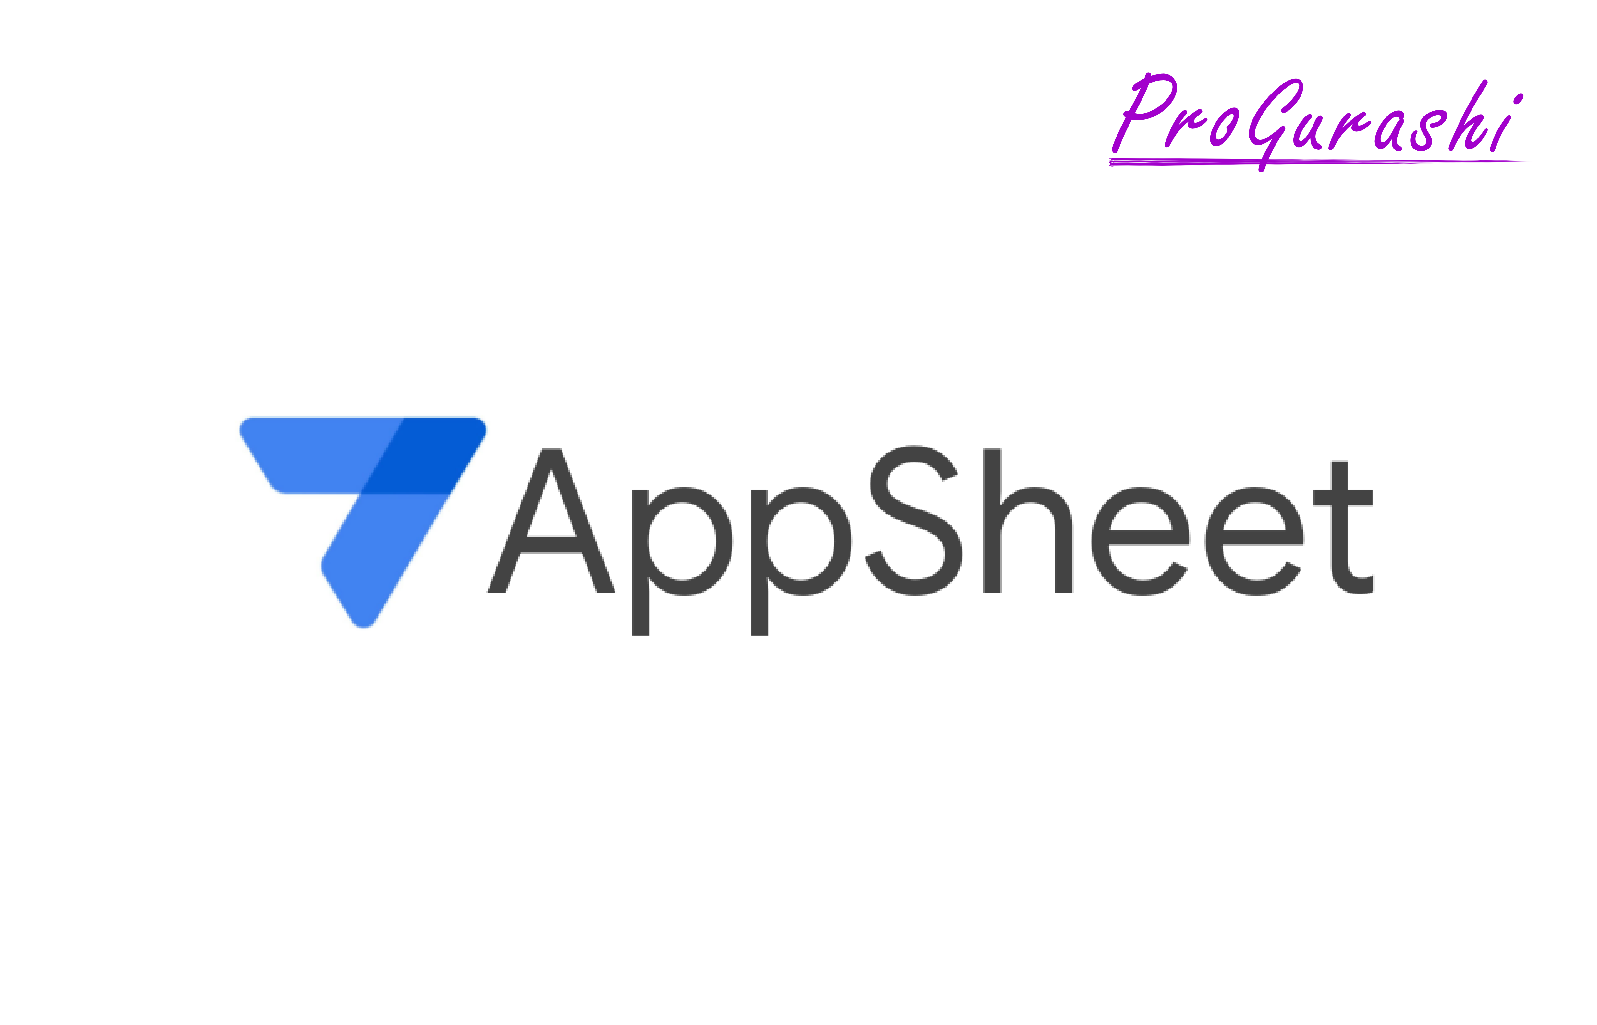 app sheet アップシート appsheet-prograshi（プロぐらし）-kv